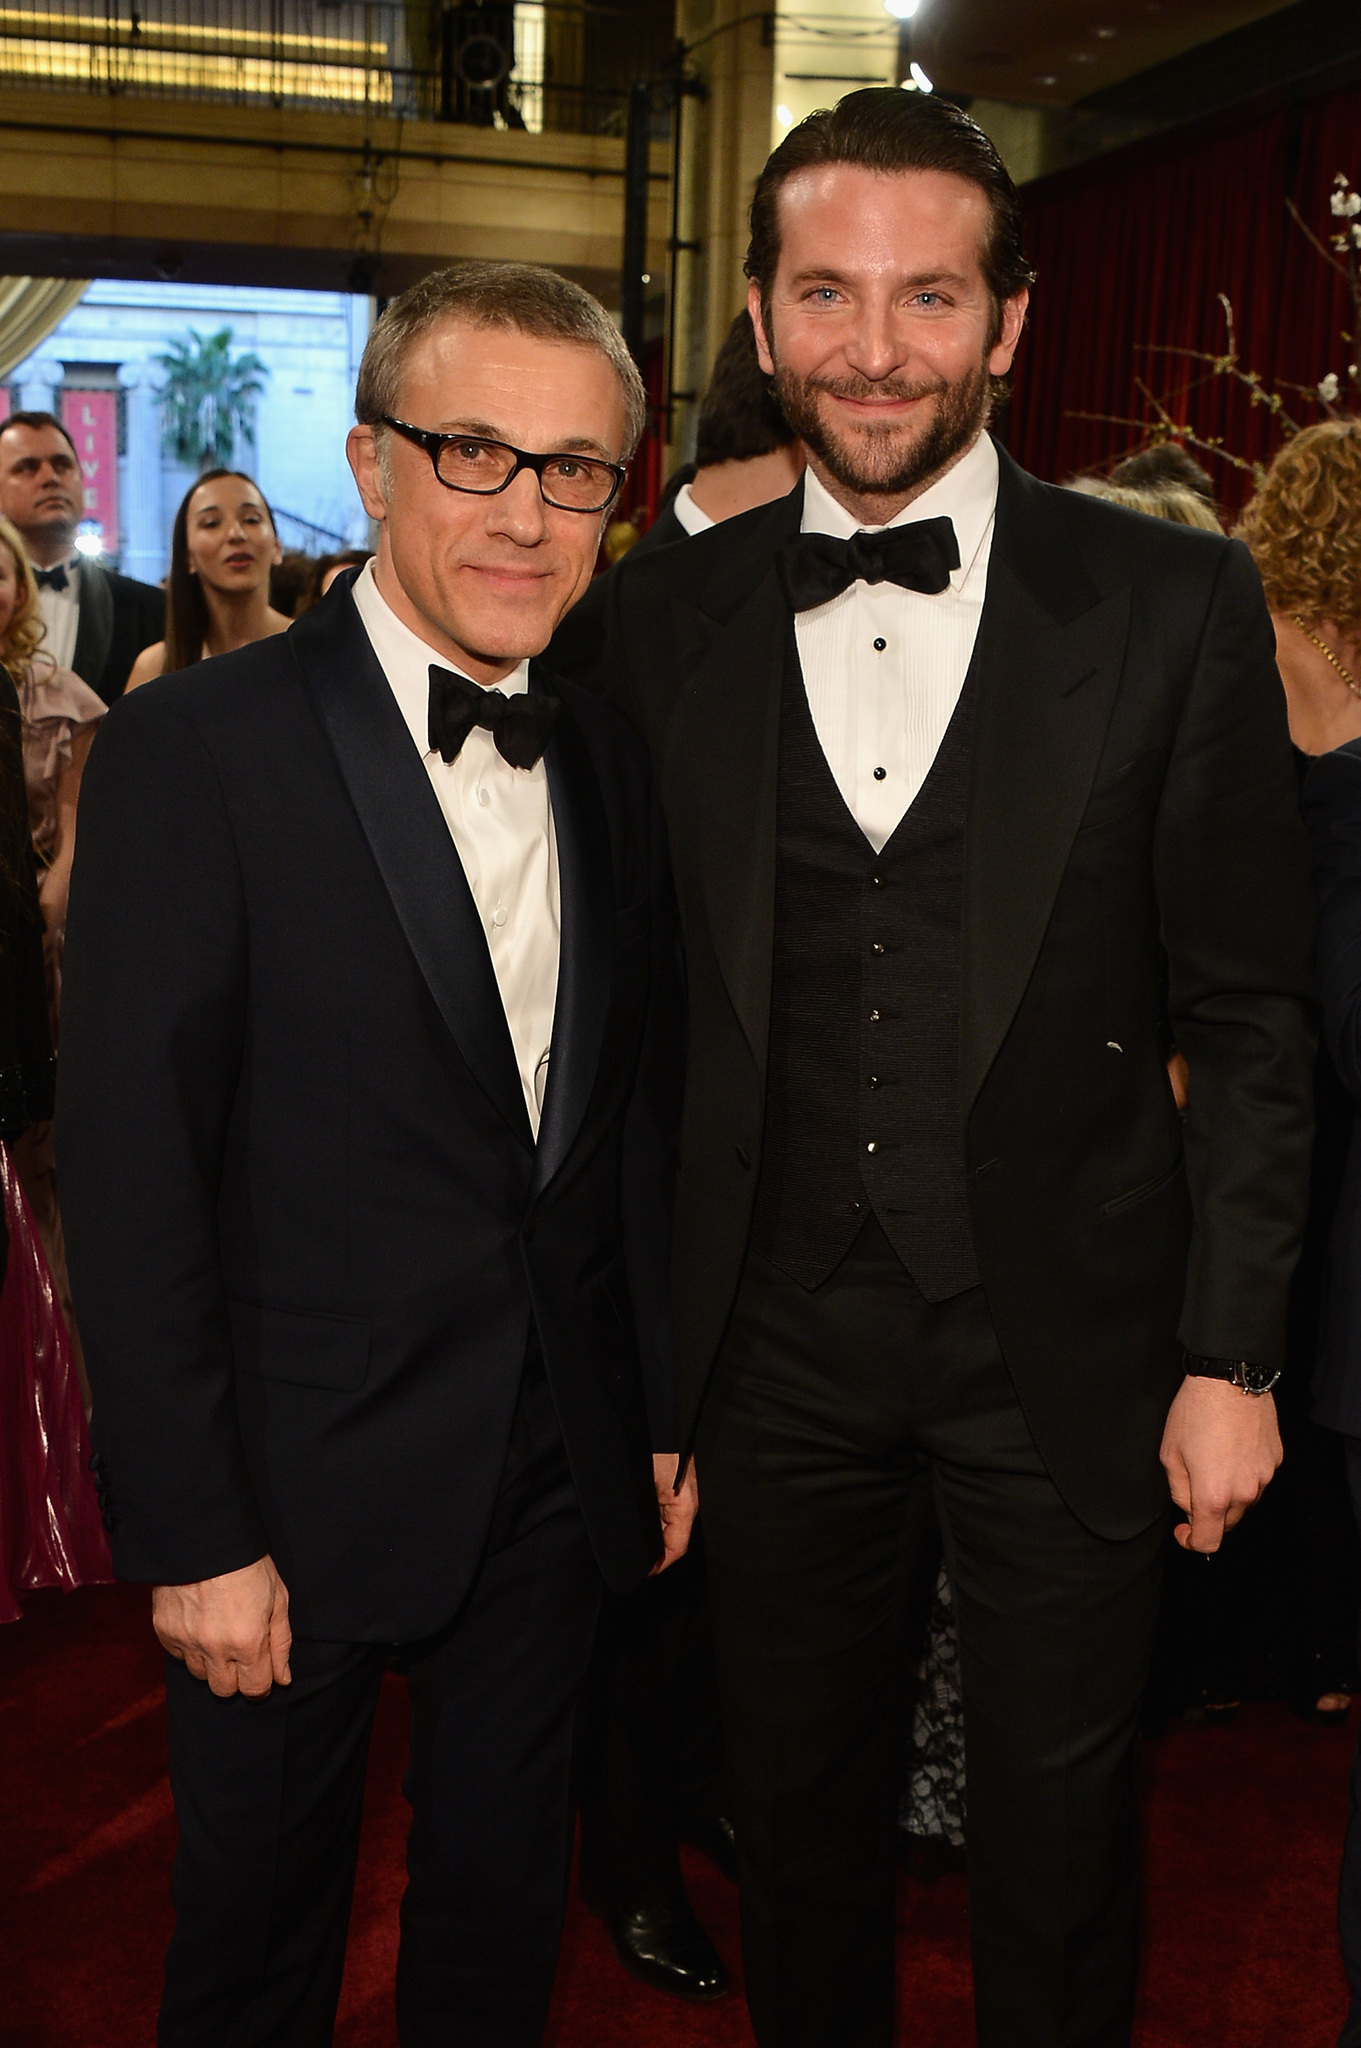 Bradley Cooper and Christoph Waltz